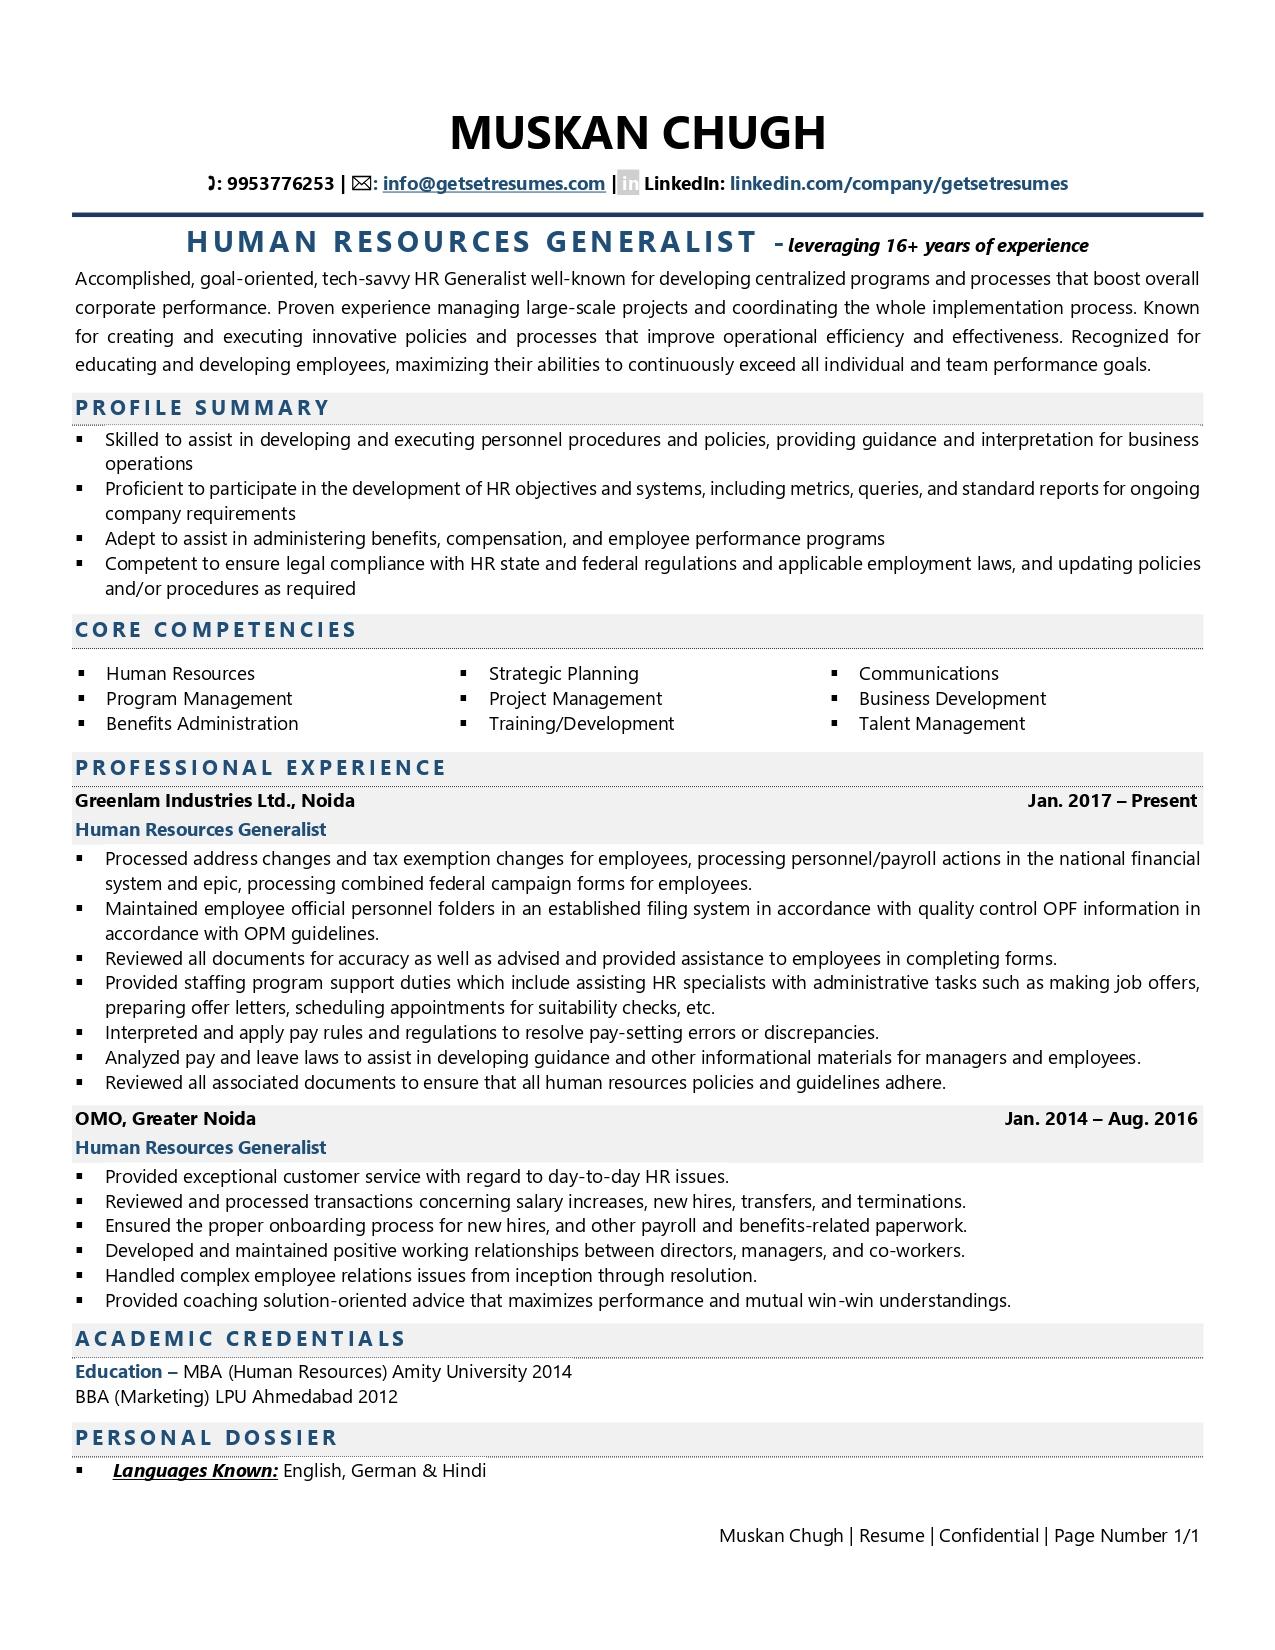 human resources generalist job description resume